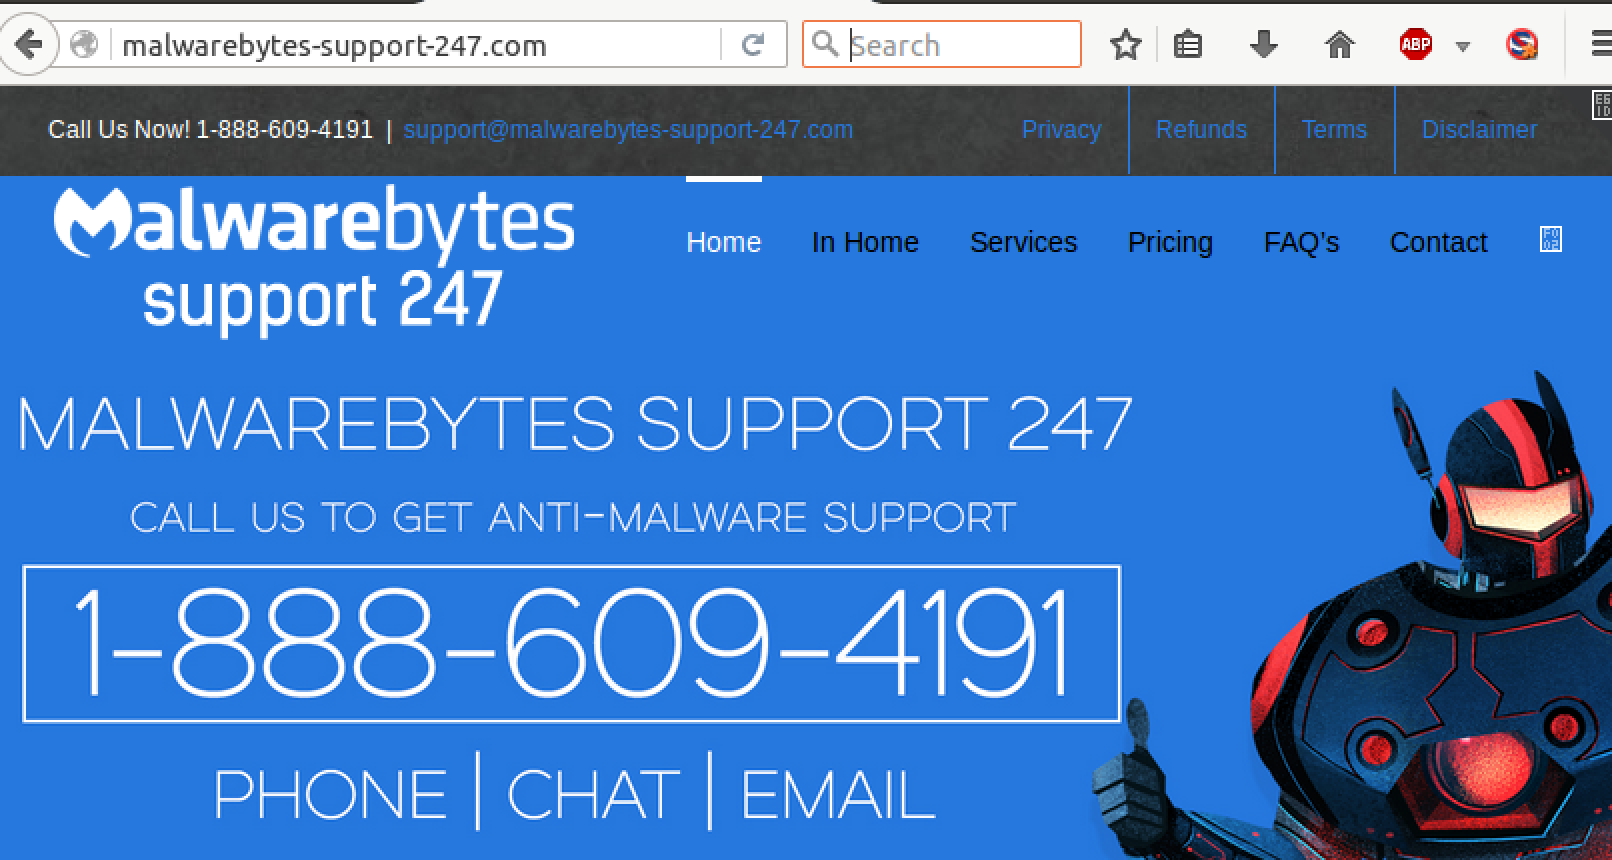 A fake Malwarebytes support website